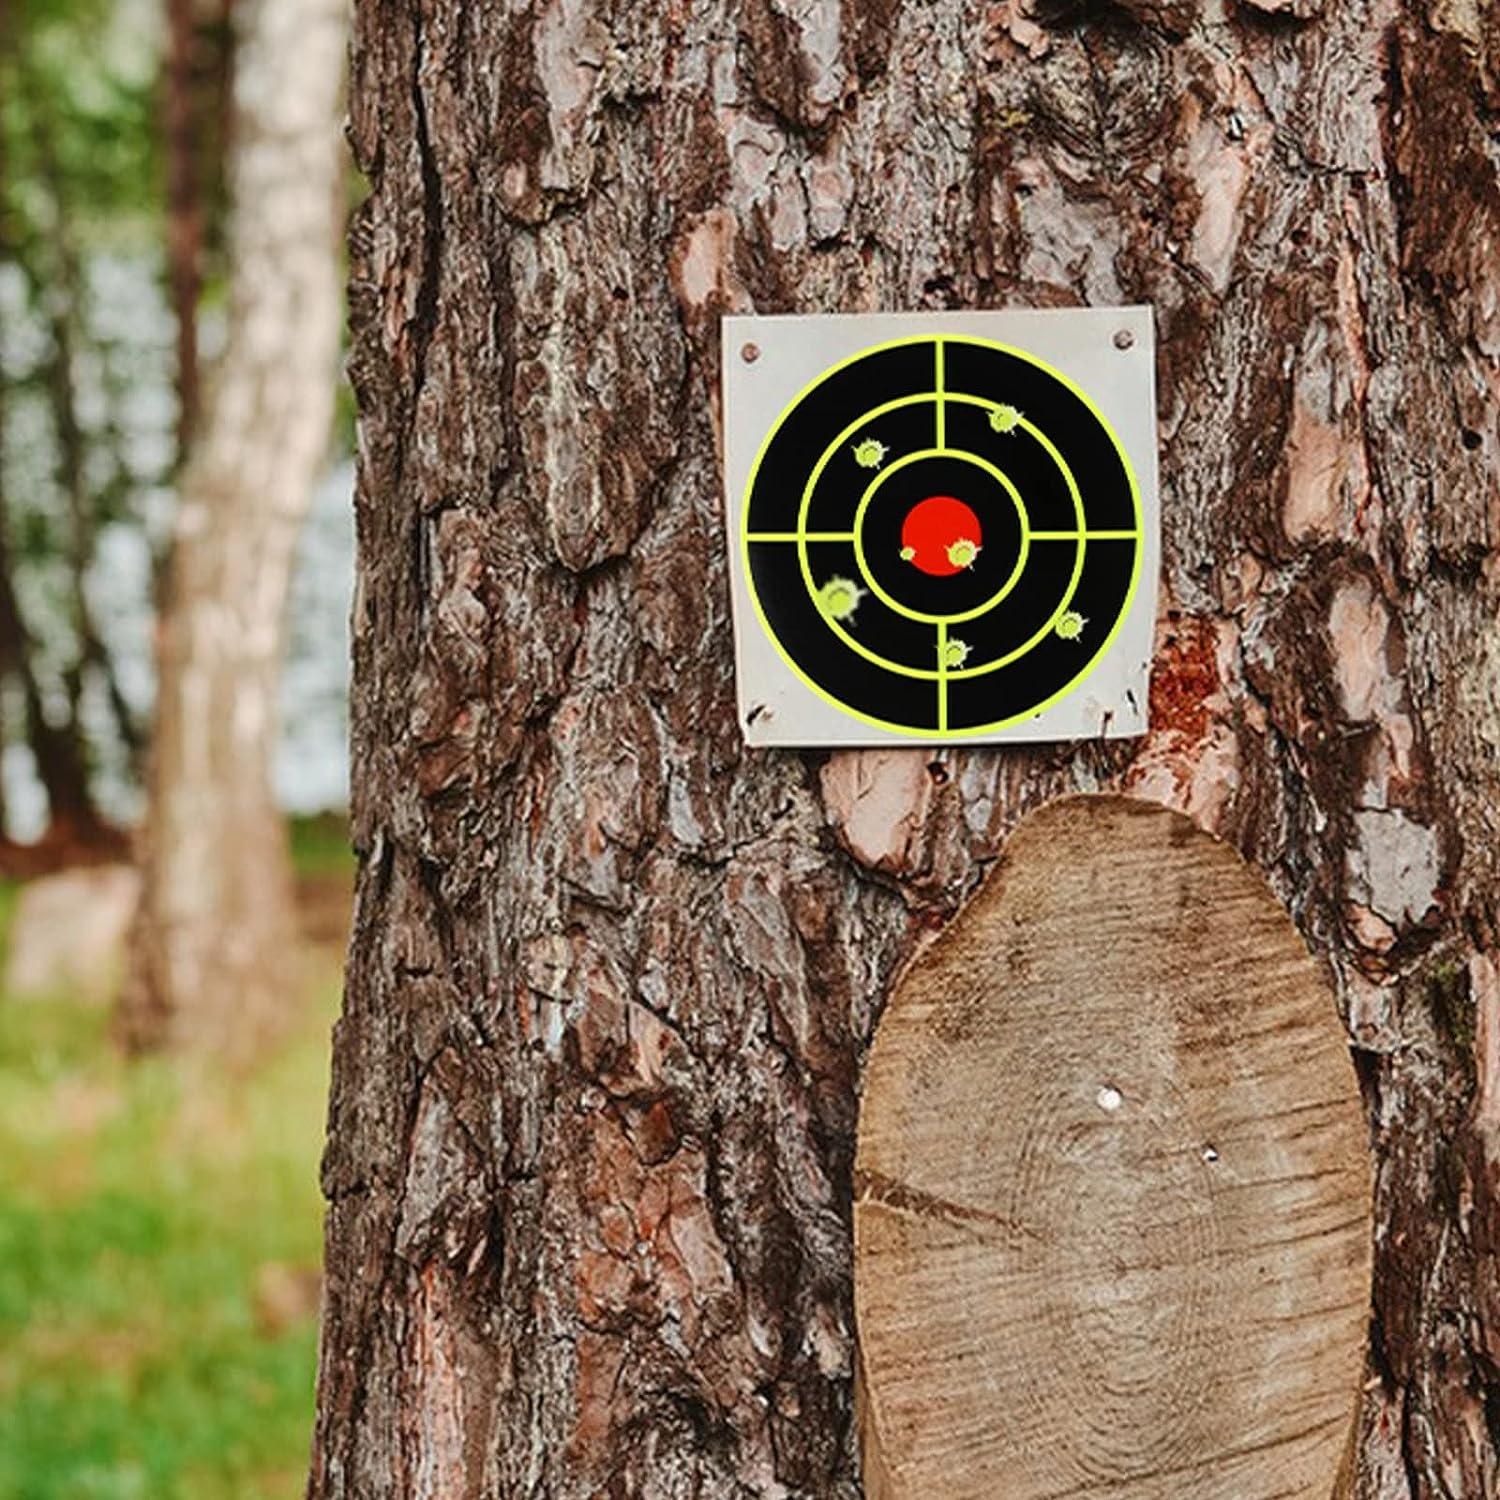 100 Pcs Shooting Targets Self Adhesive Splatter Targets 3 Inch